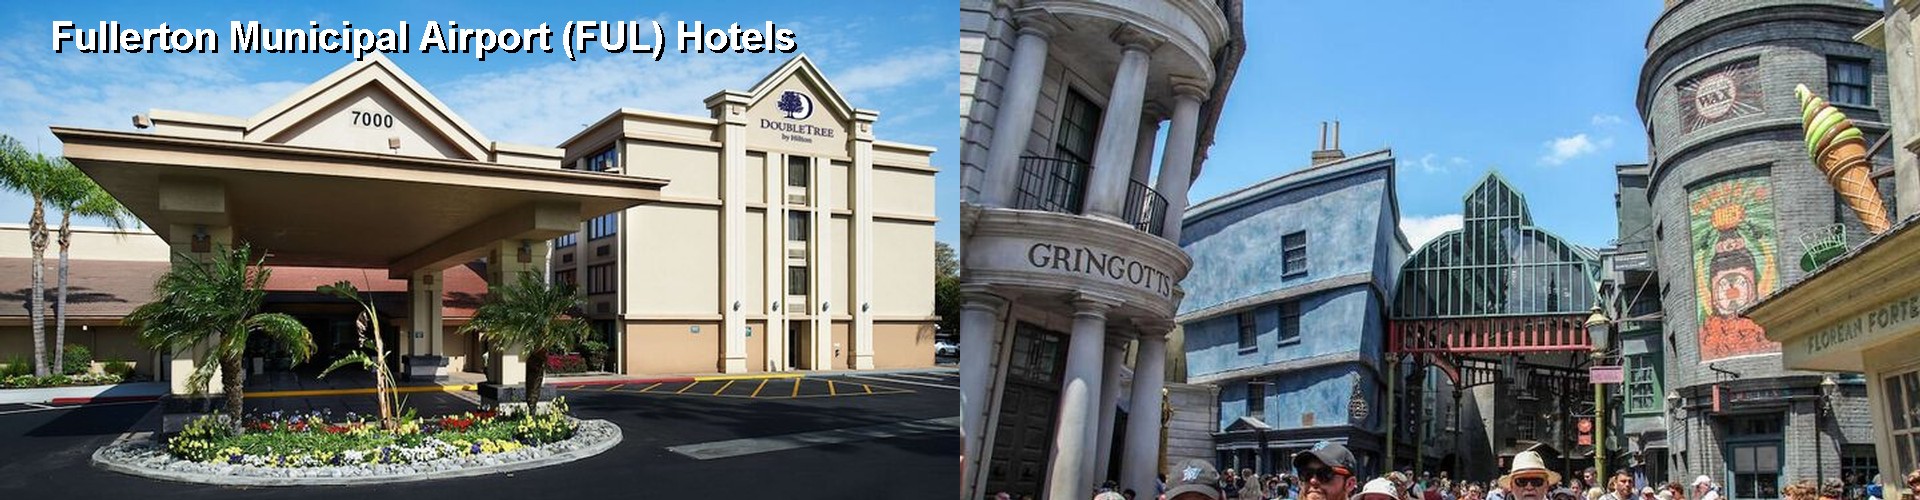 3 Best Hotels near Fullerton Municipal Airport (FUL)